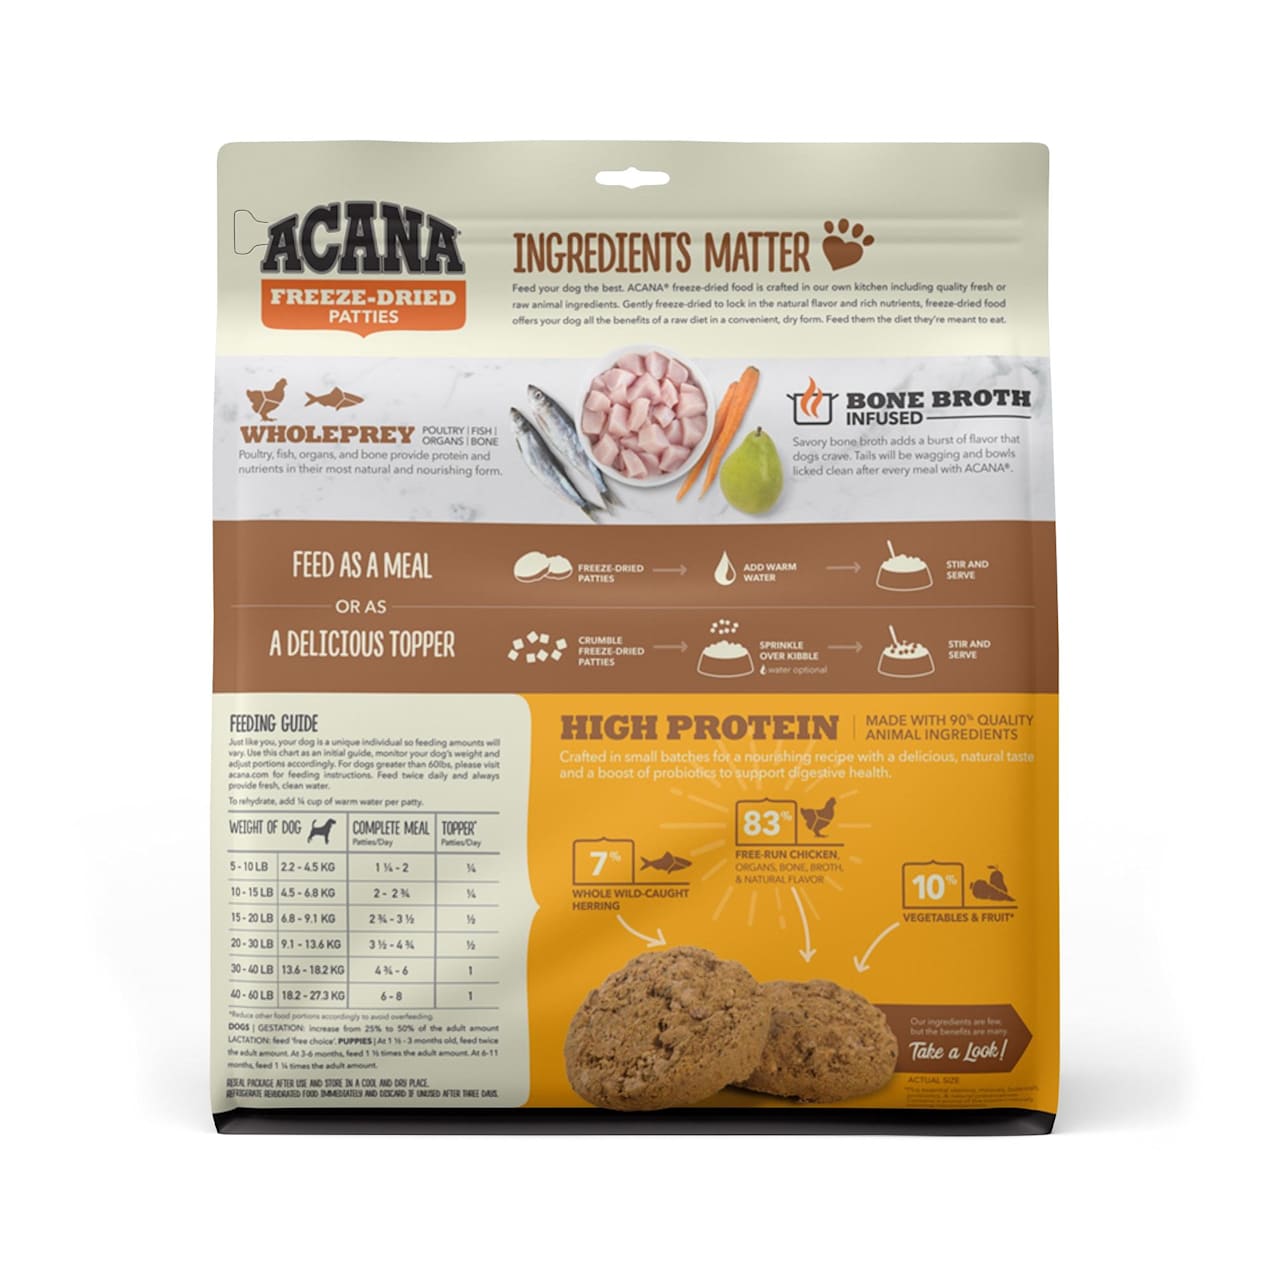 Acana Ranch Free Run Chicken Recipe Freeze Dried Dog Food Patties, 14oz